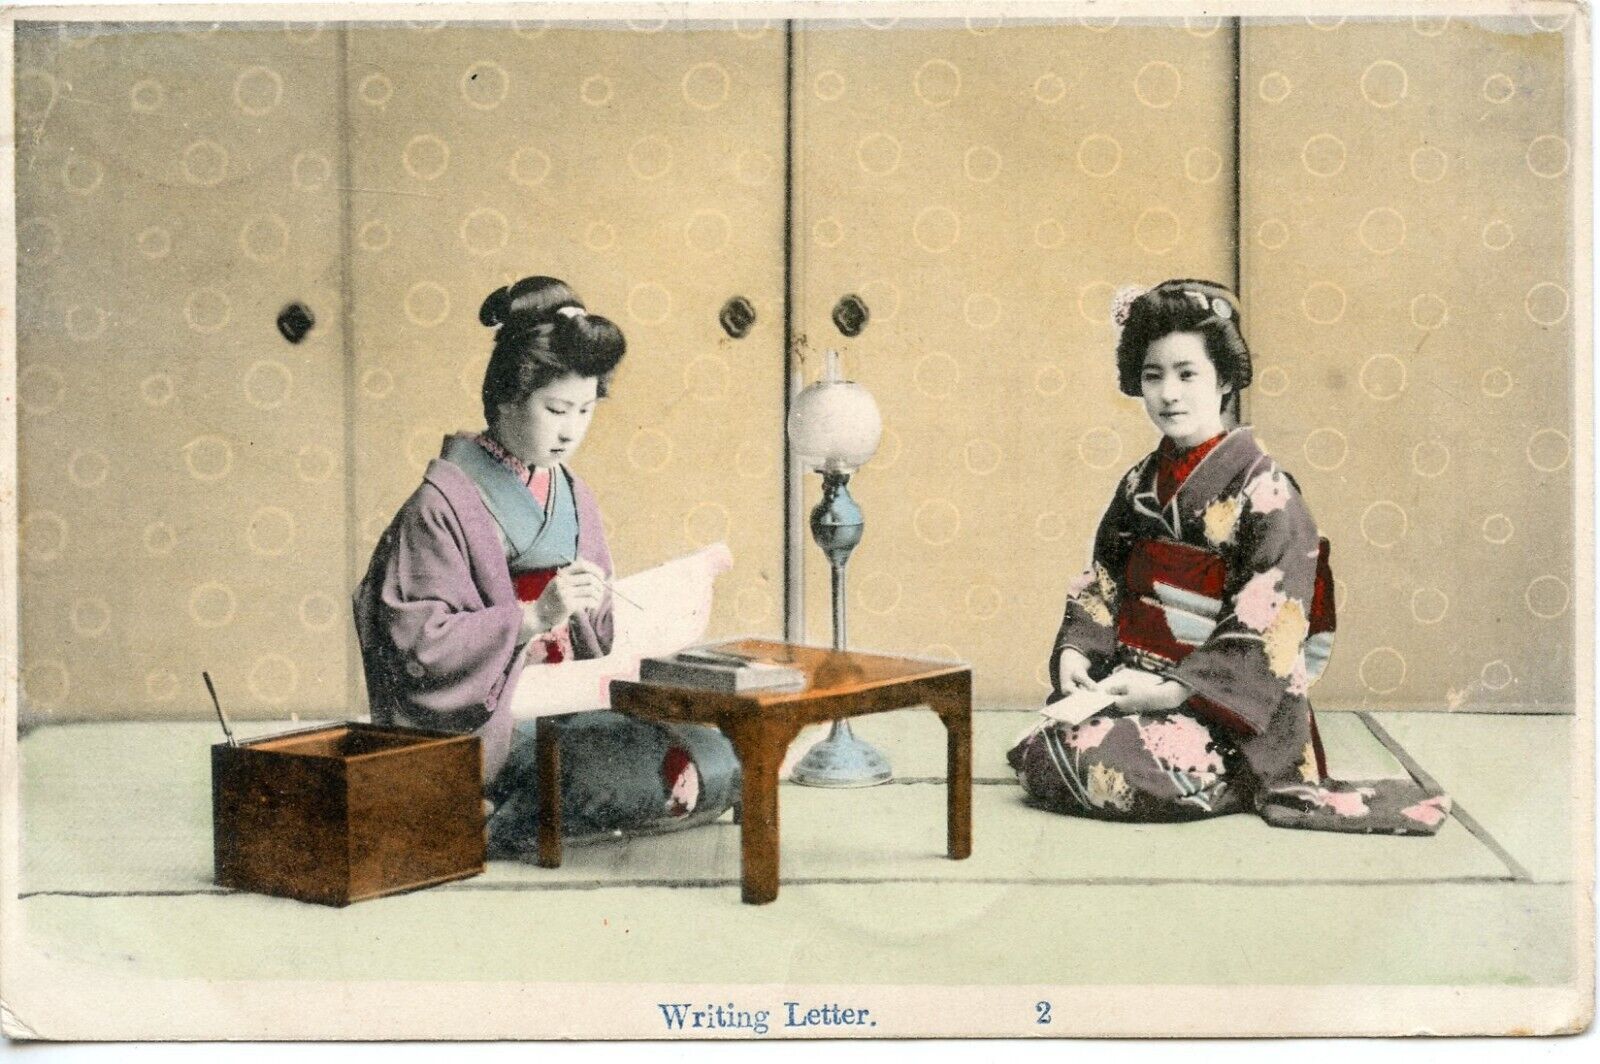 CPA / JAPAN JAPAN JAPAN GEISHA WRITING LETTER + STAMP TOKYO VIA SIBERIA / NICE 1914